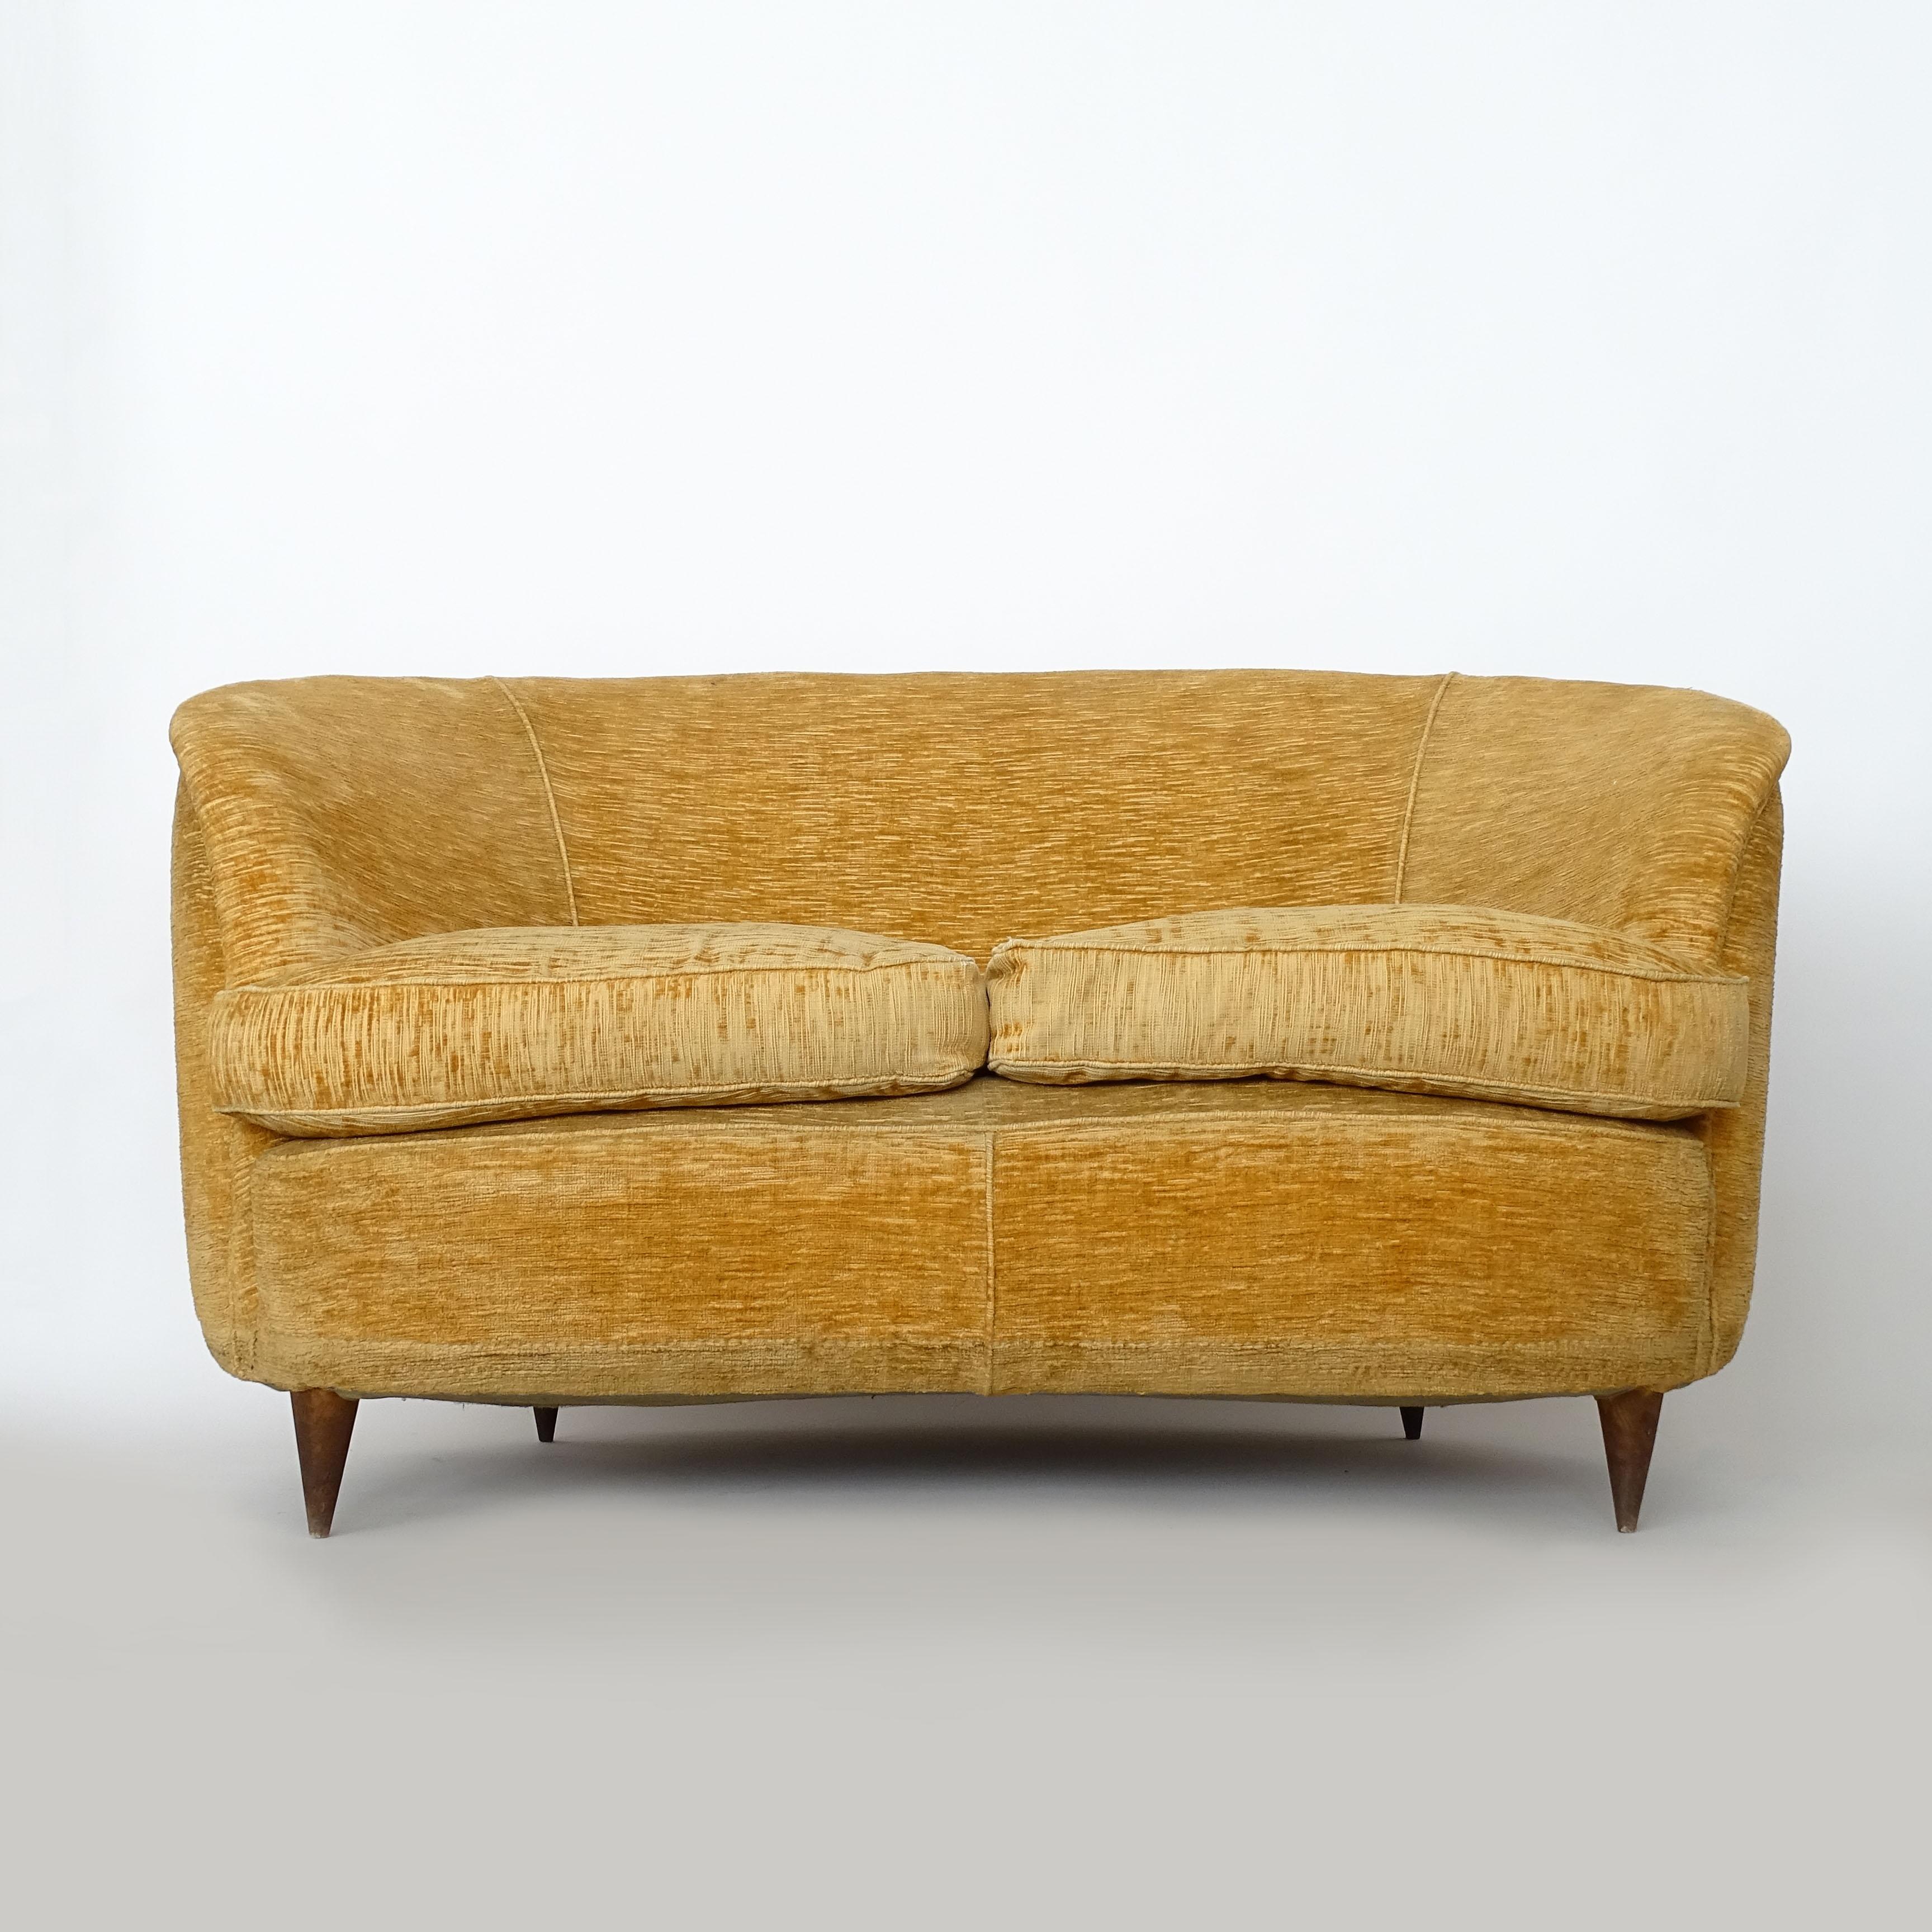 Mid-Century Modern Love seat sofa by Casa & Giardino, Italy 1940s